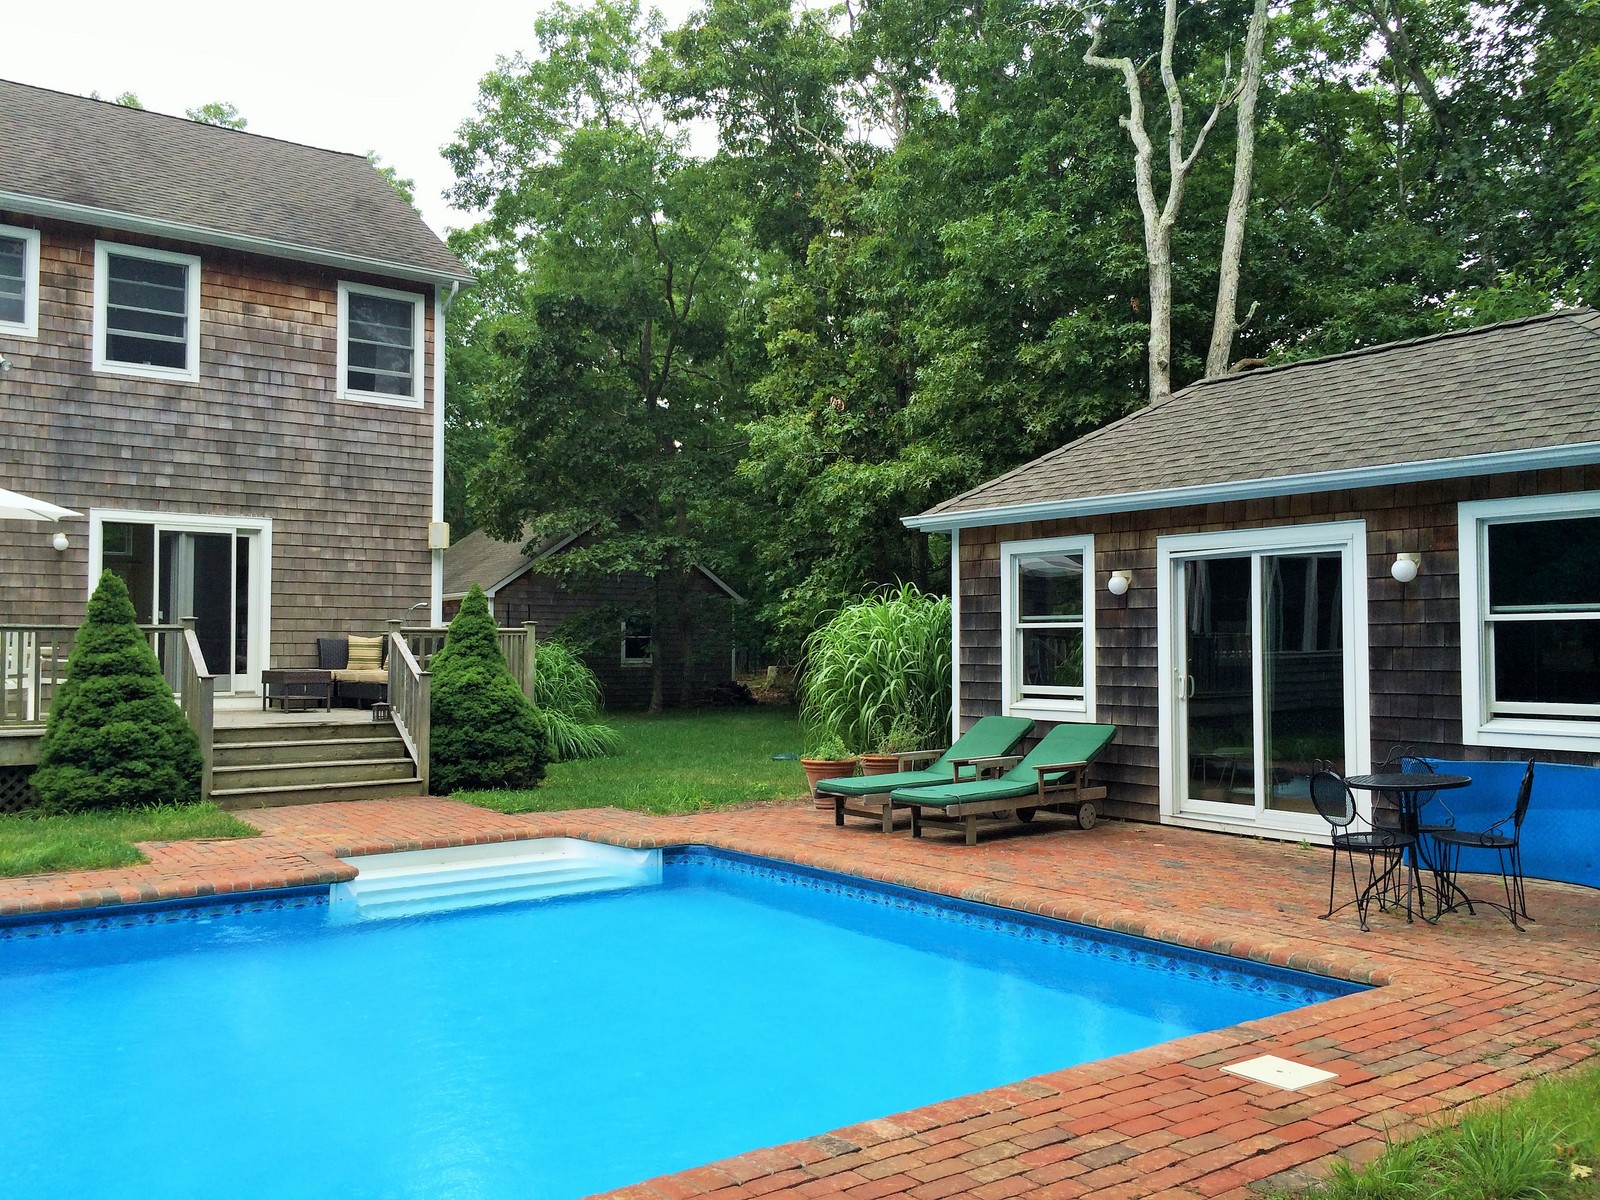 Rental Property at East Hampton, East Hampton, Hamptons, NY - Bedrooms: 4 
Bathrooms: 4.5  - $40,000 MO.